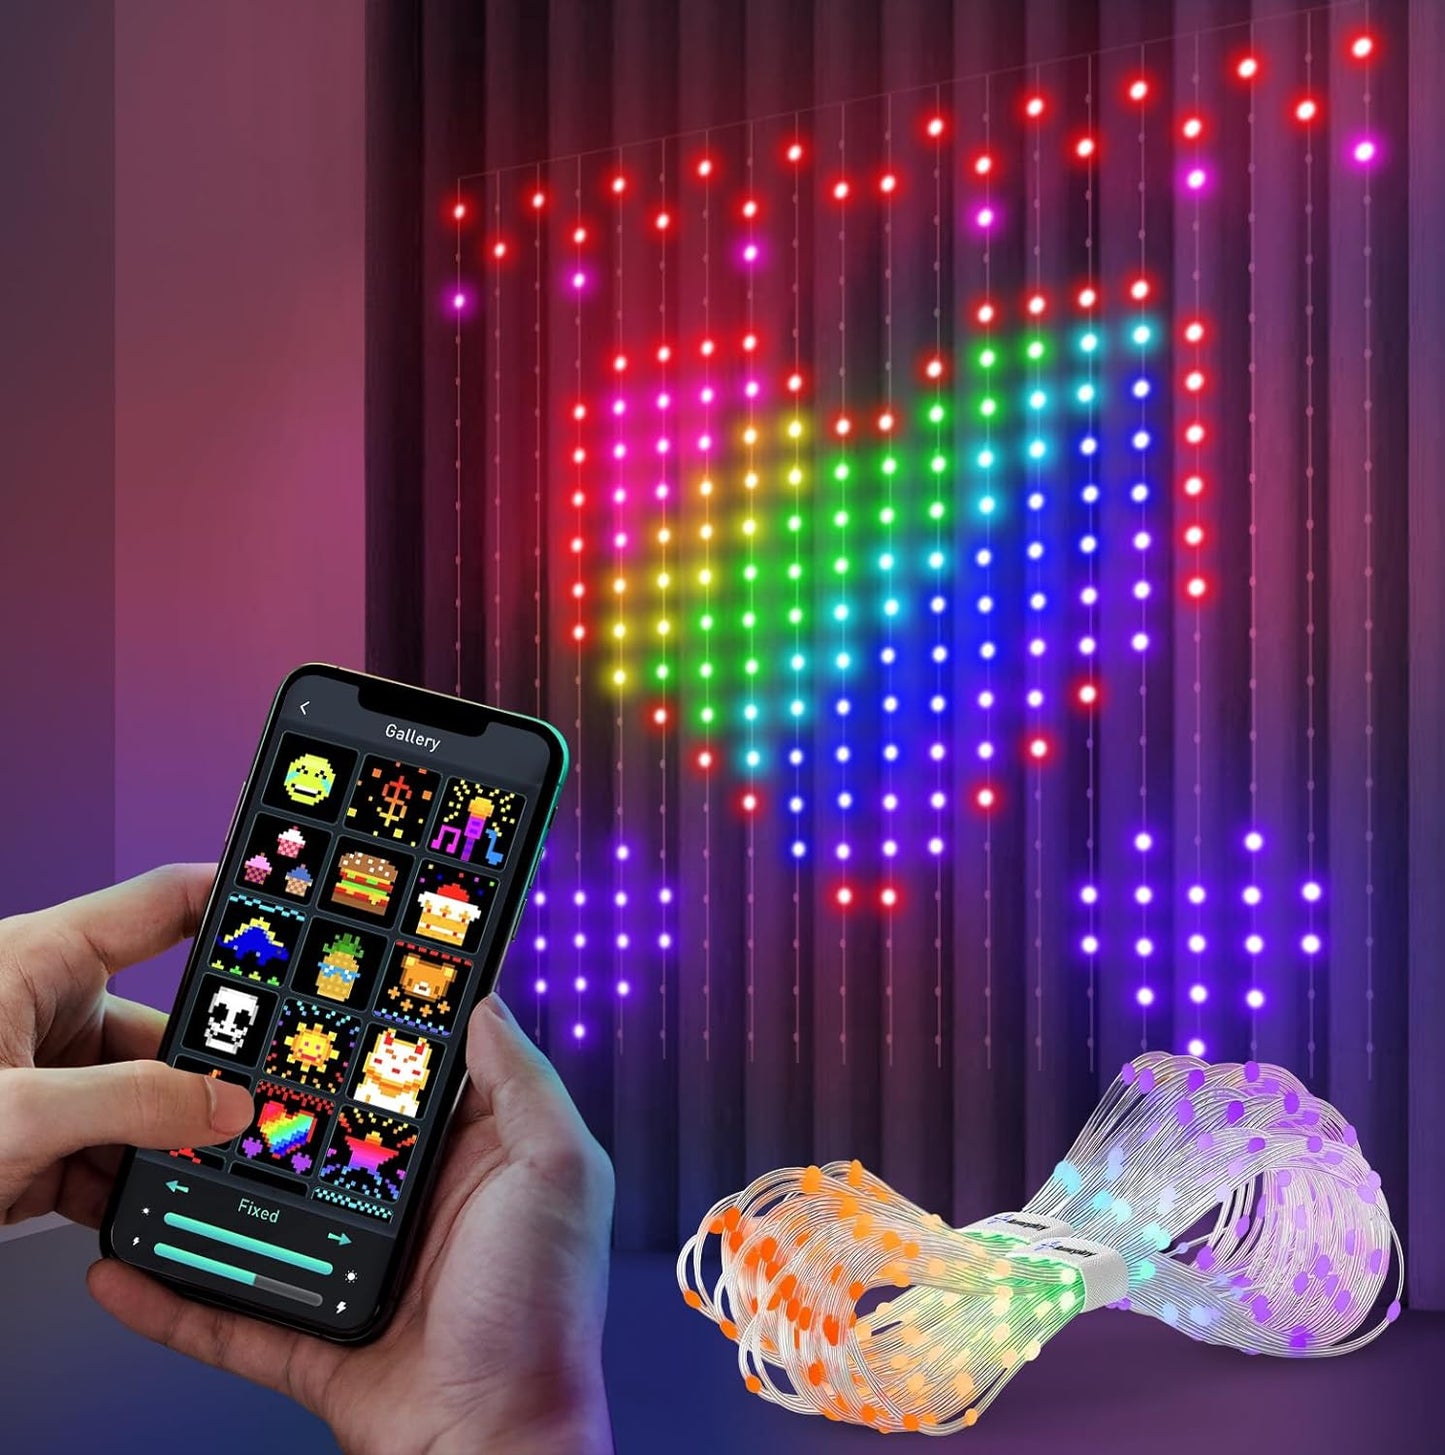 LED Scape™ | LED Curtain Lights